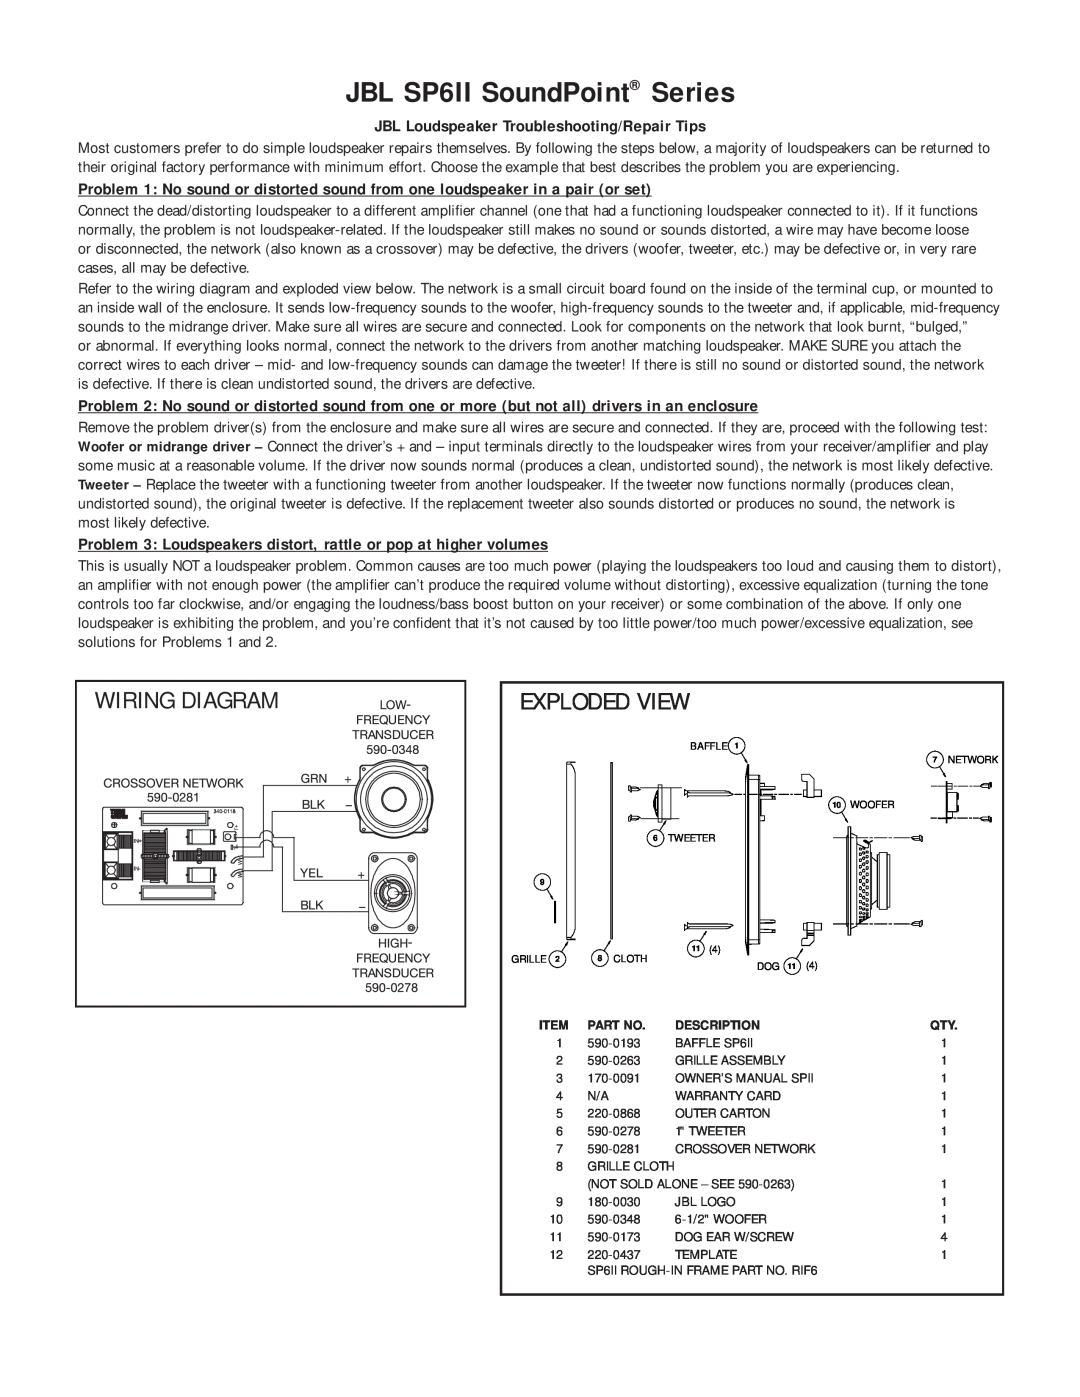 JBL owner manual JBL SP6II SoundPoint Series, Exploded View, Wiring Diagram 